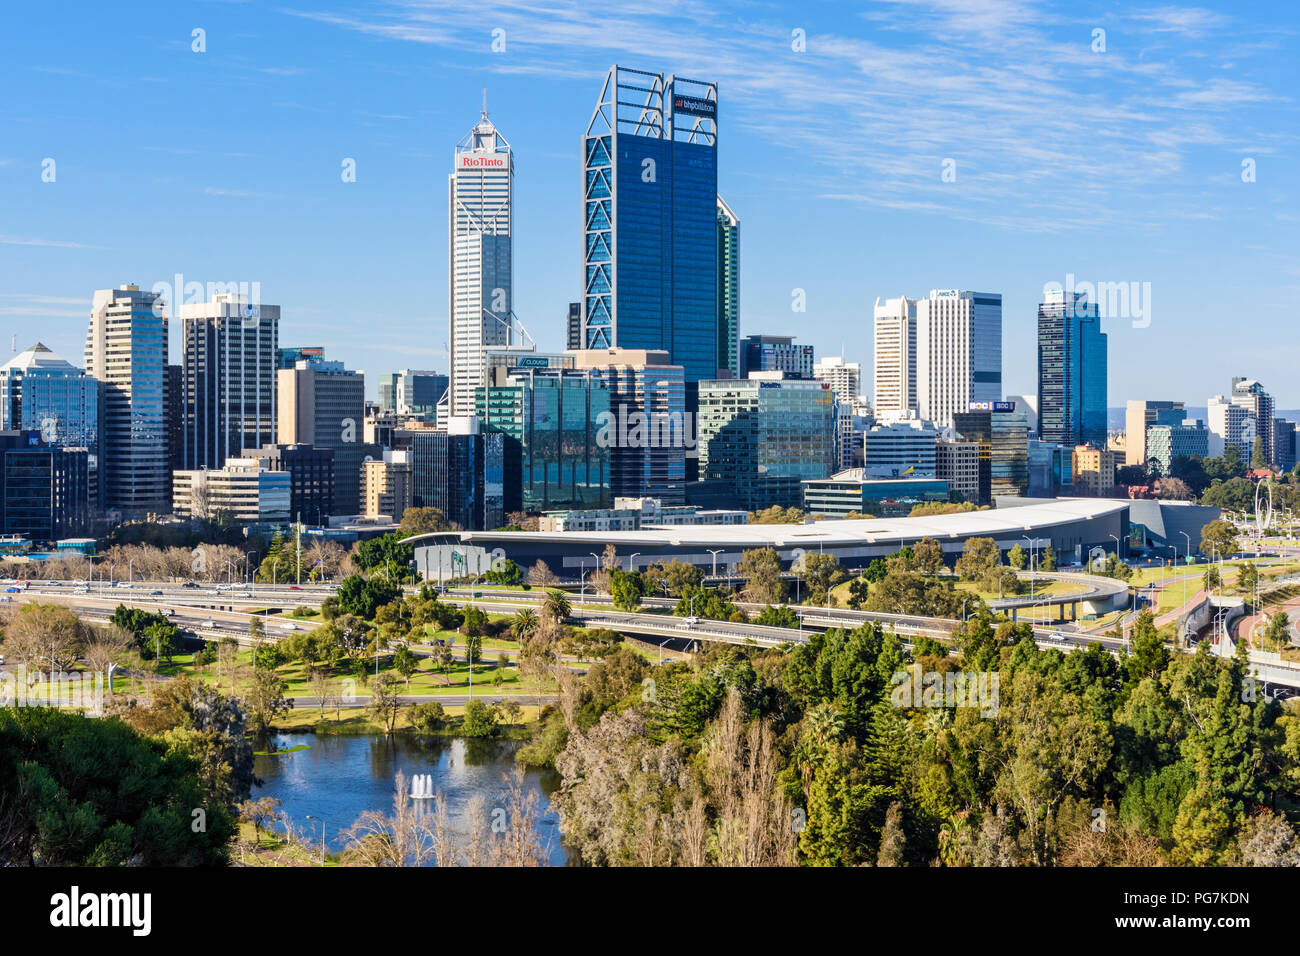 El horizonte del paisaje urbano de la ciudad de Perth, Australia Occidental, Australia Foto de stock